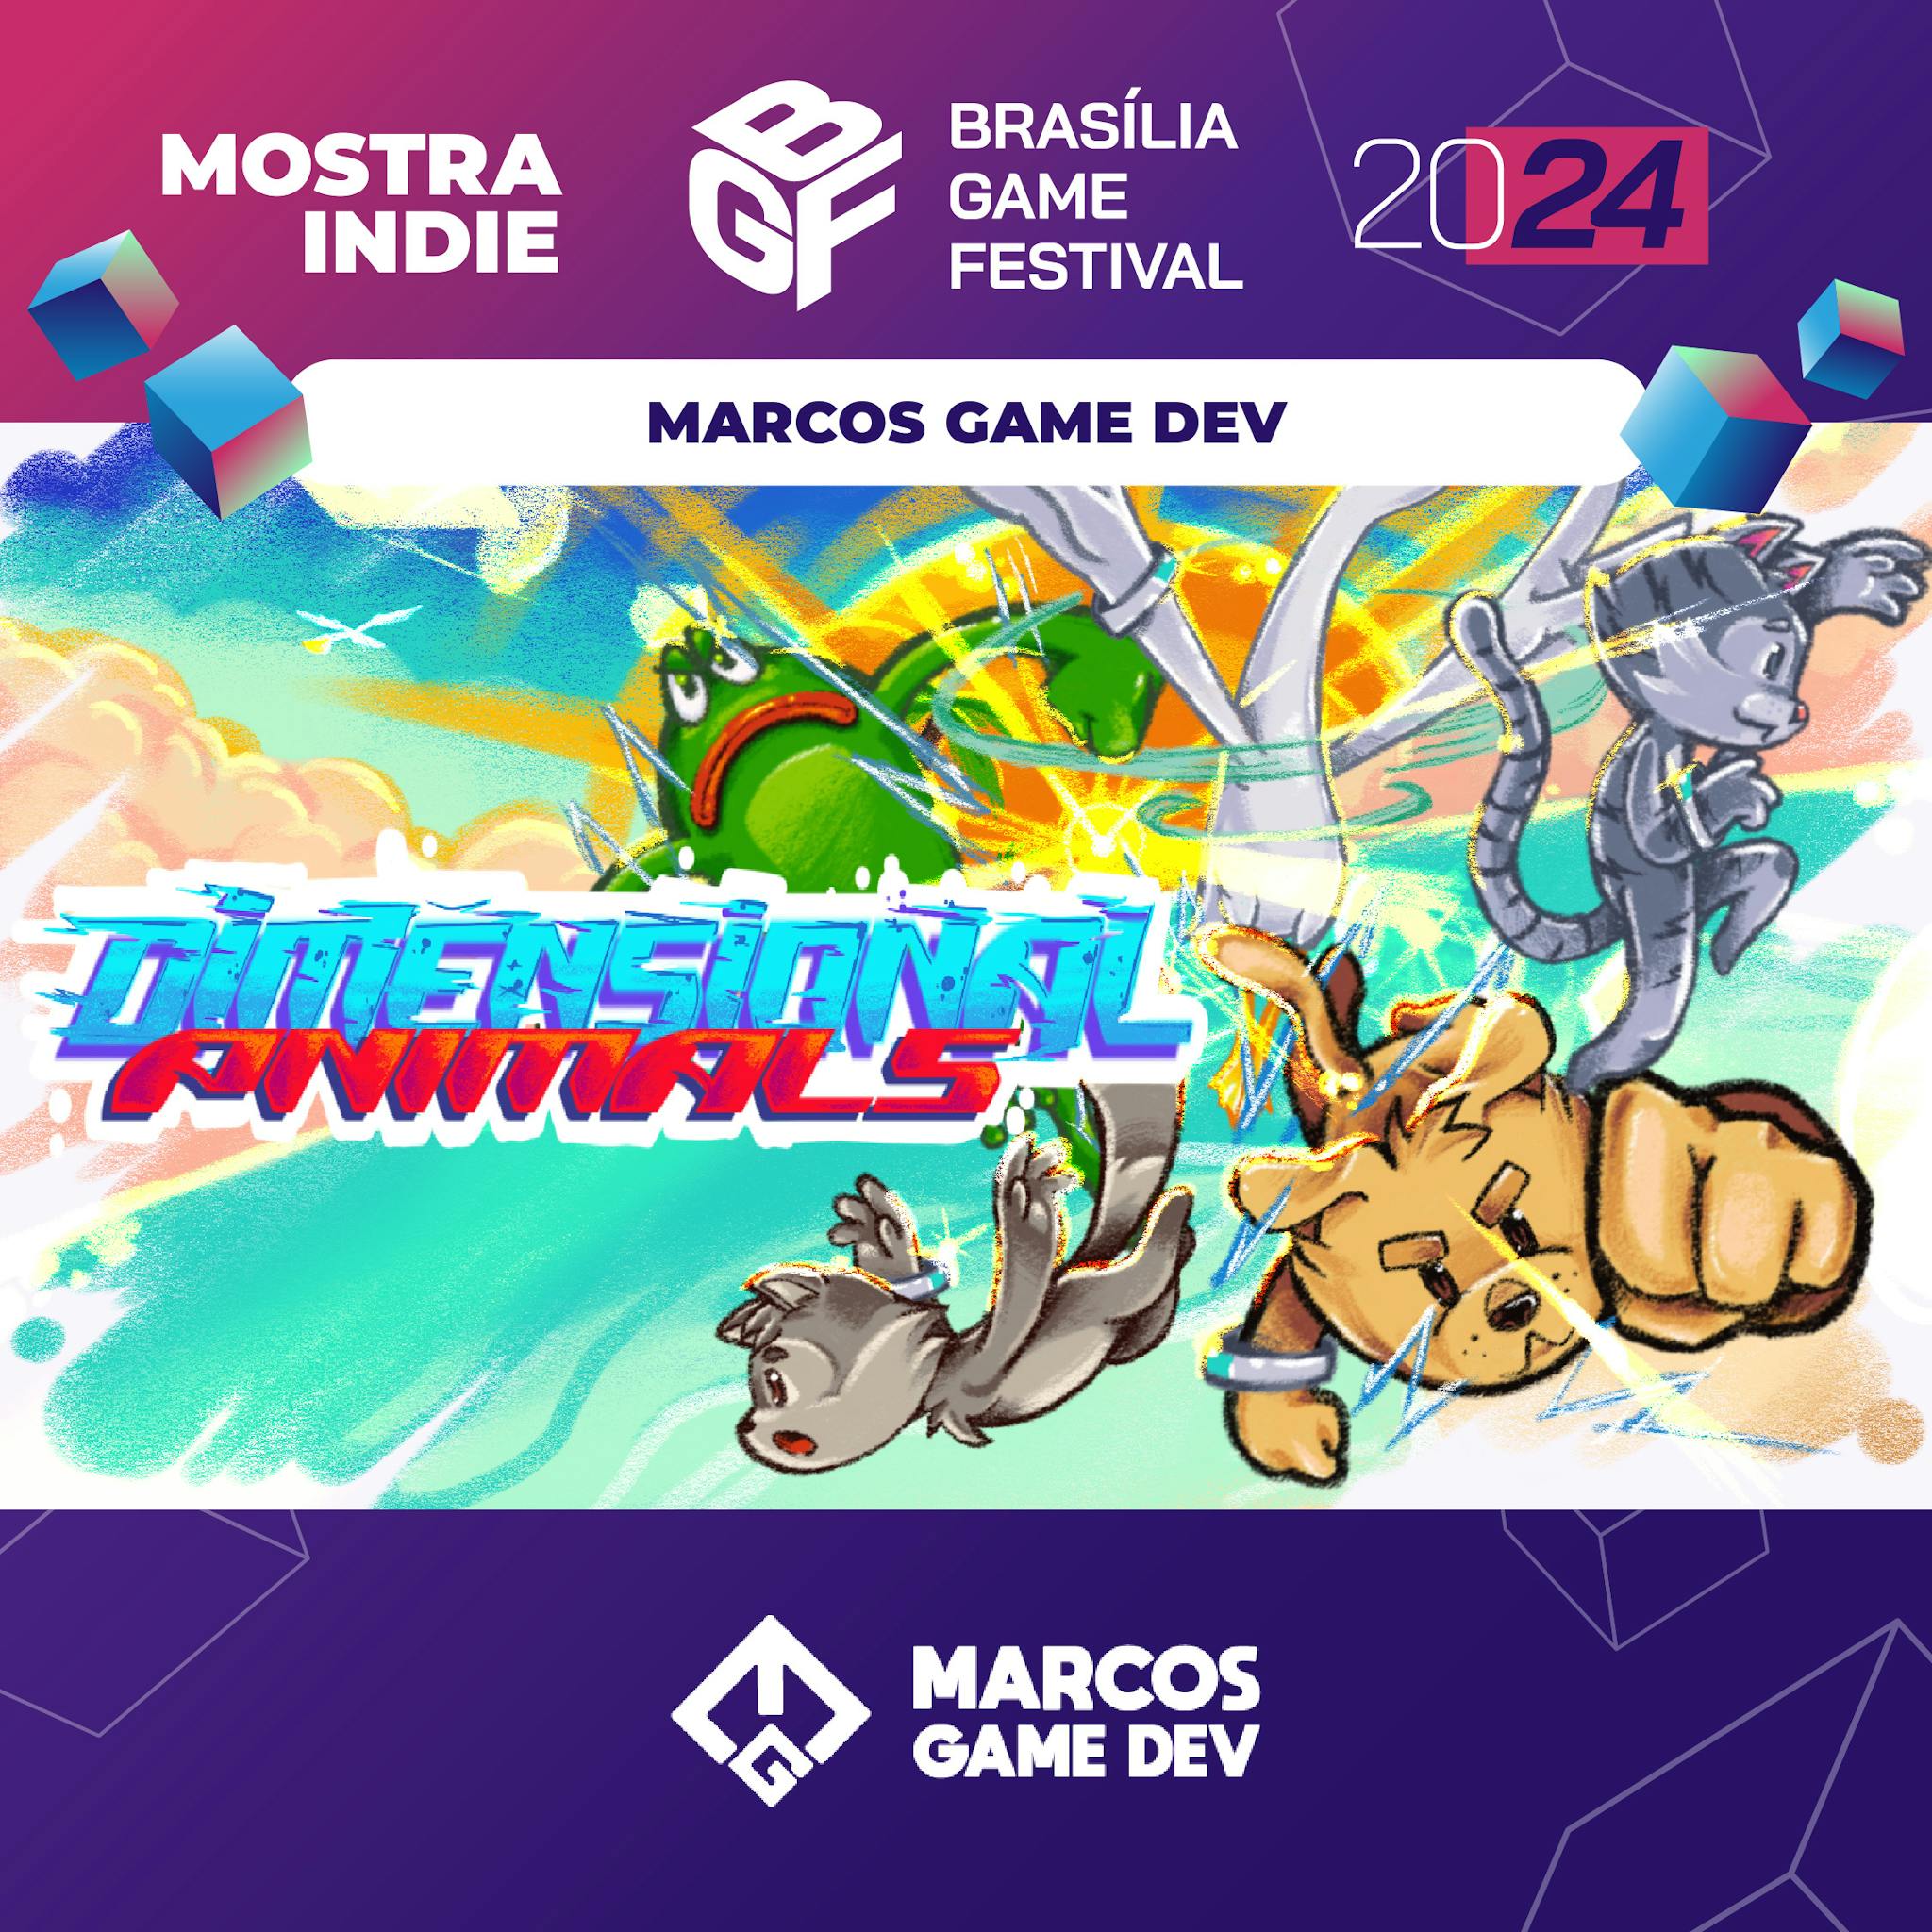 Marcos Game Dev